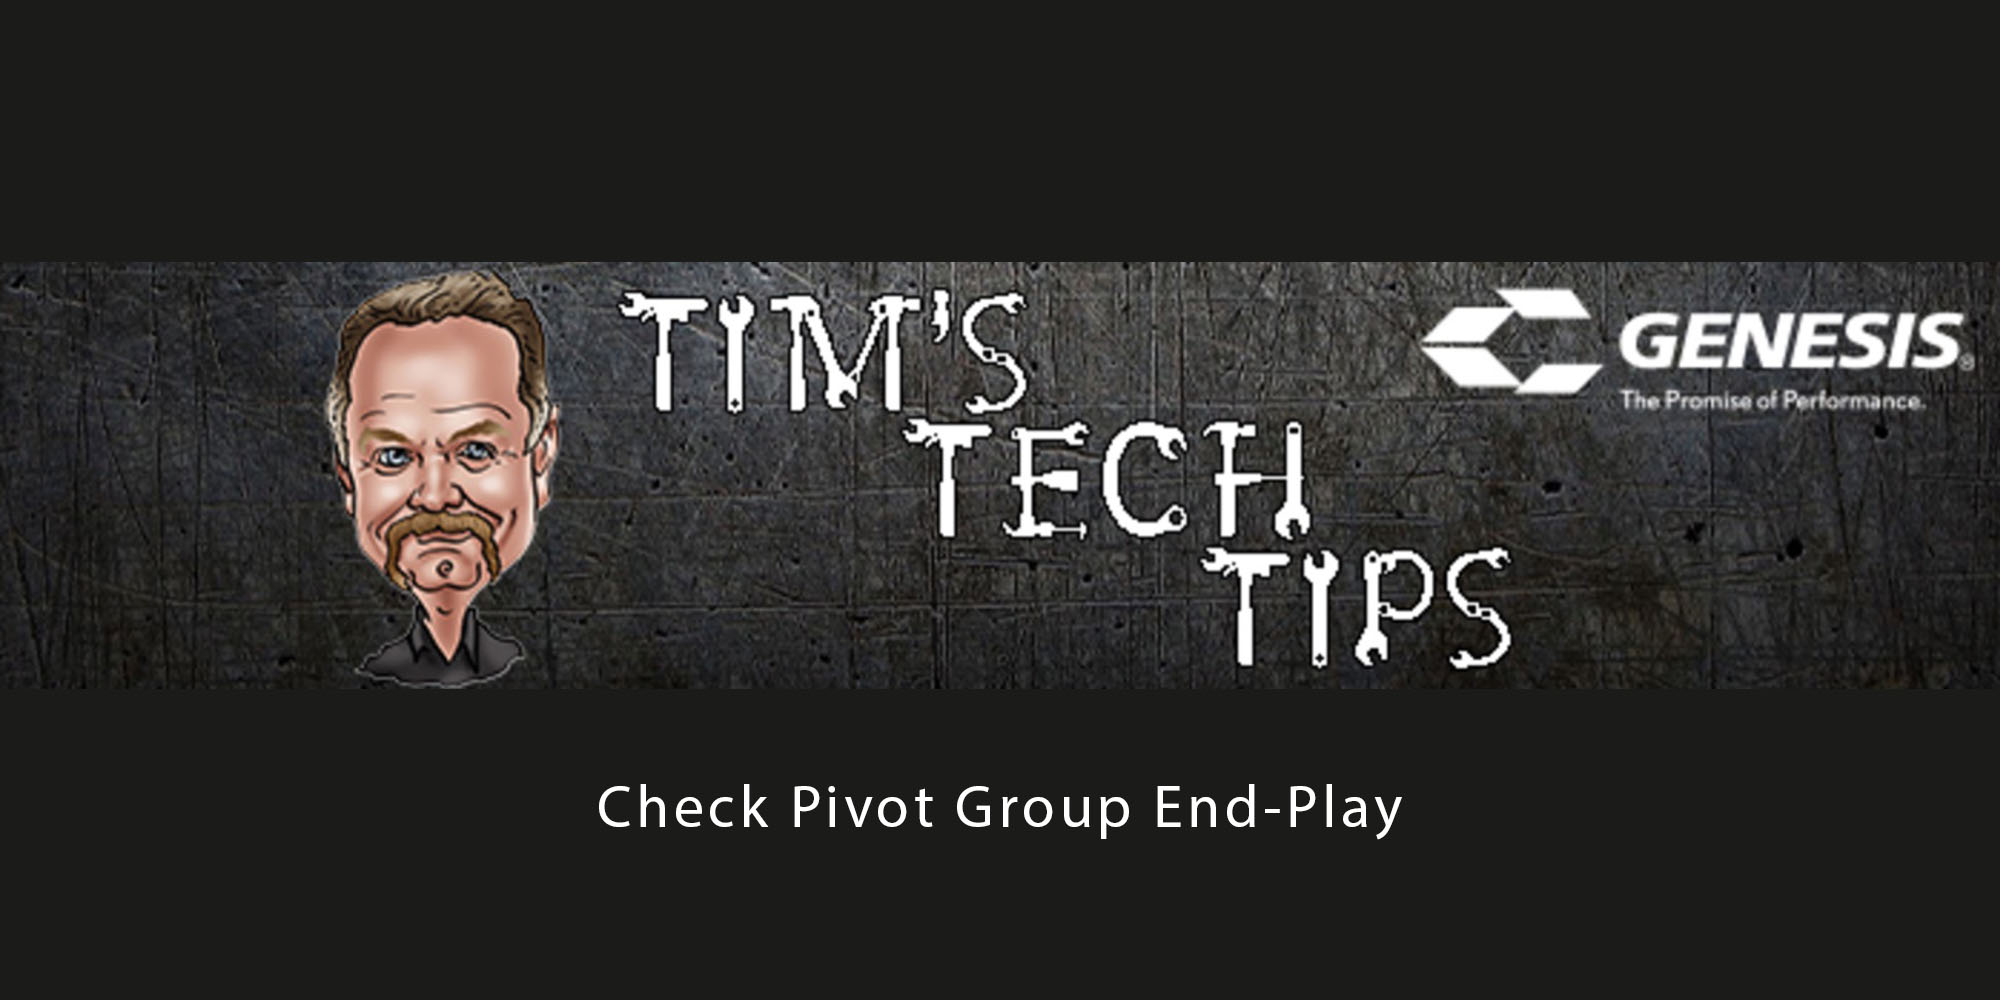 Tim's Tech Tips: Check Pivot Group End-Play